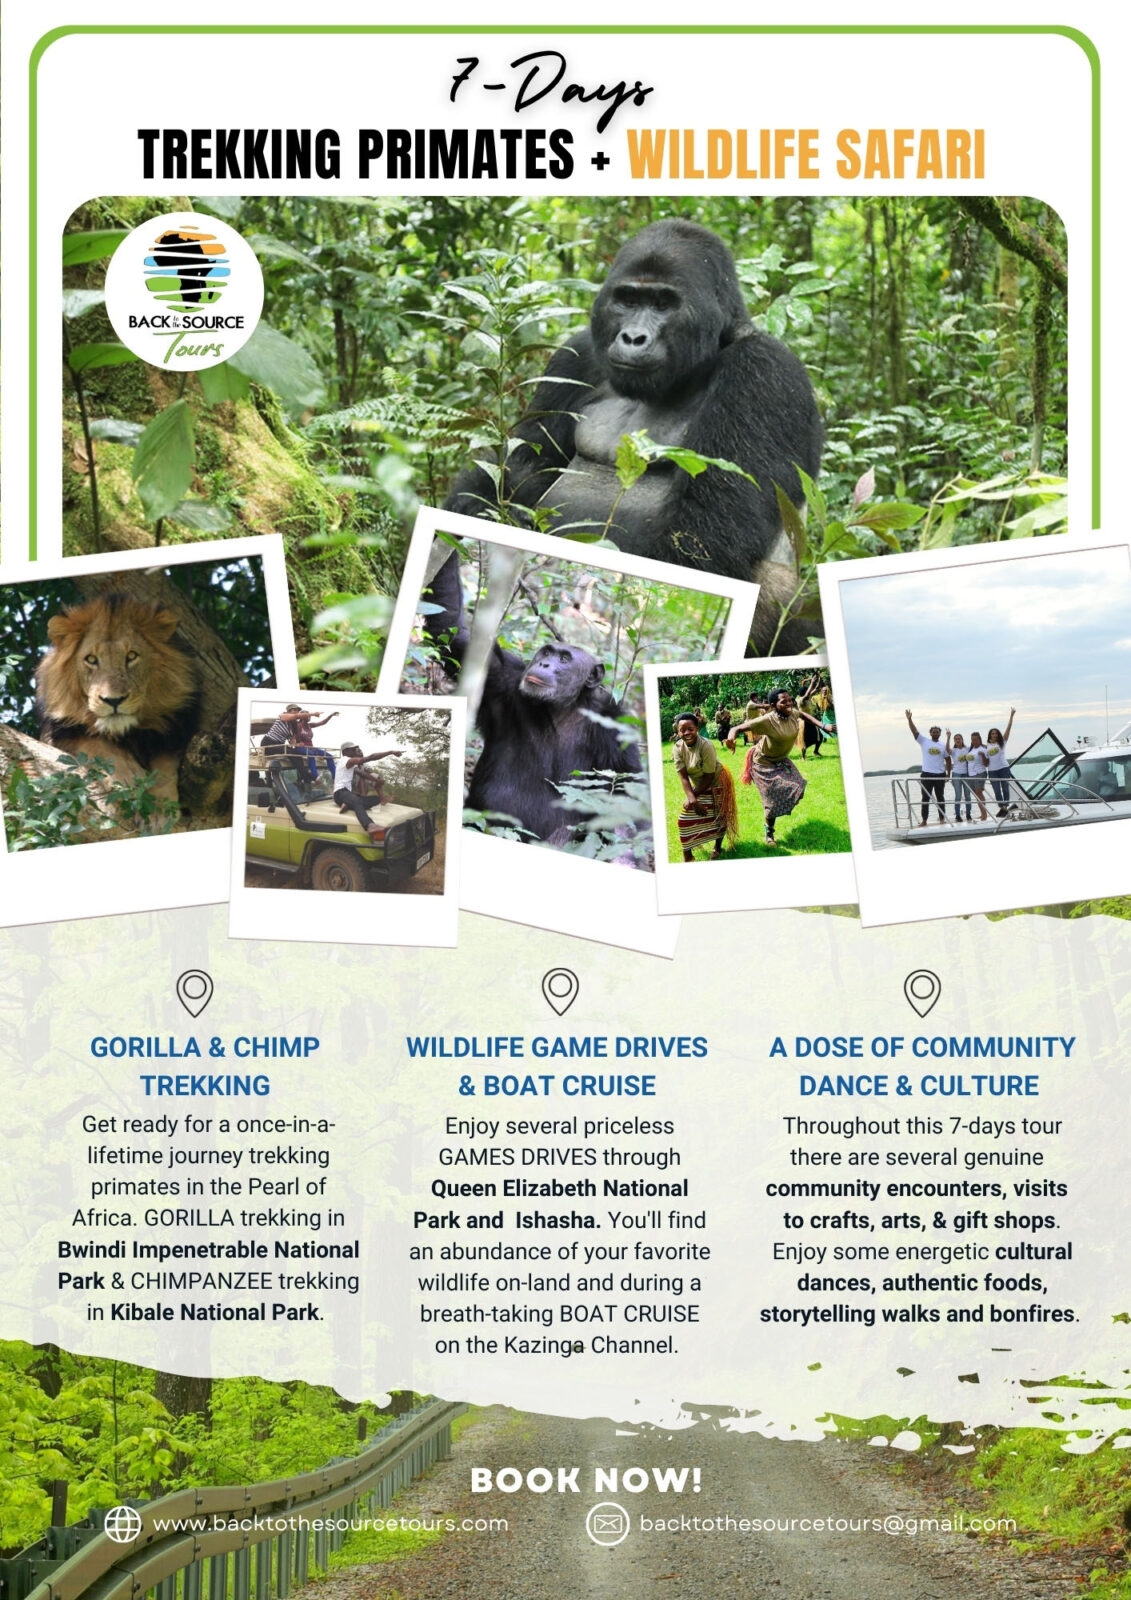 Trekking Primates and Wildlife Safari 7 Days Tour Package